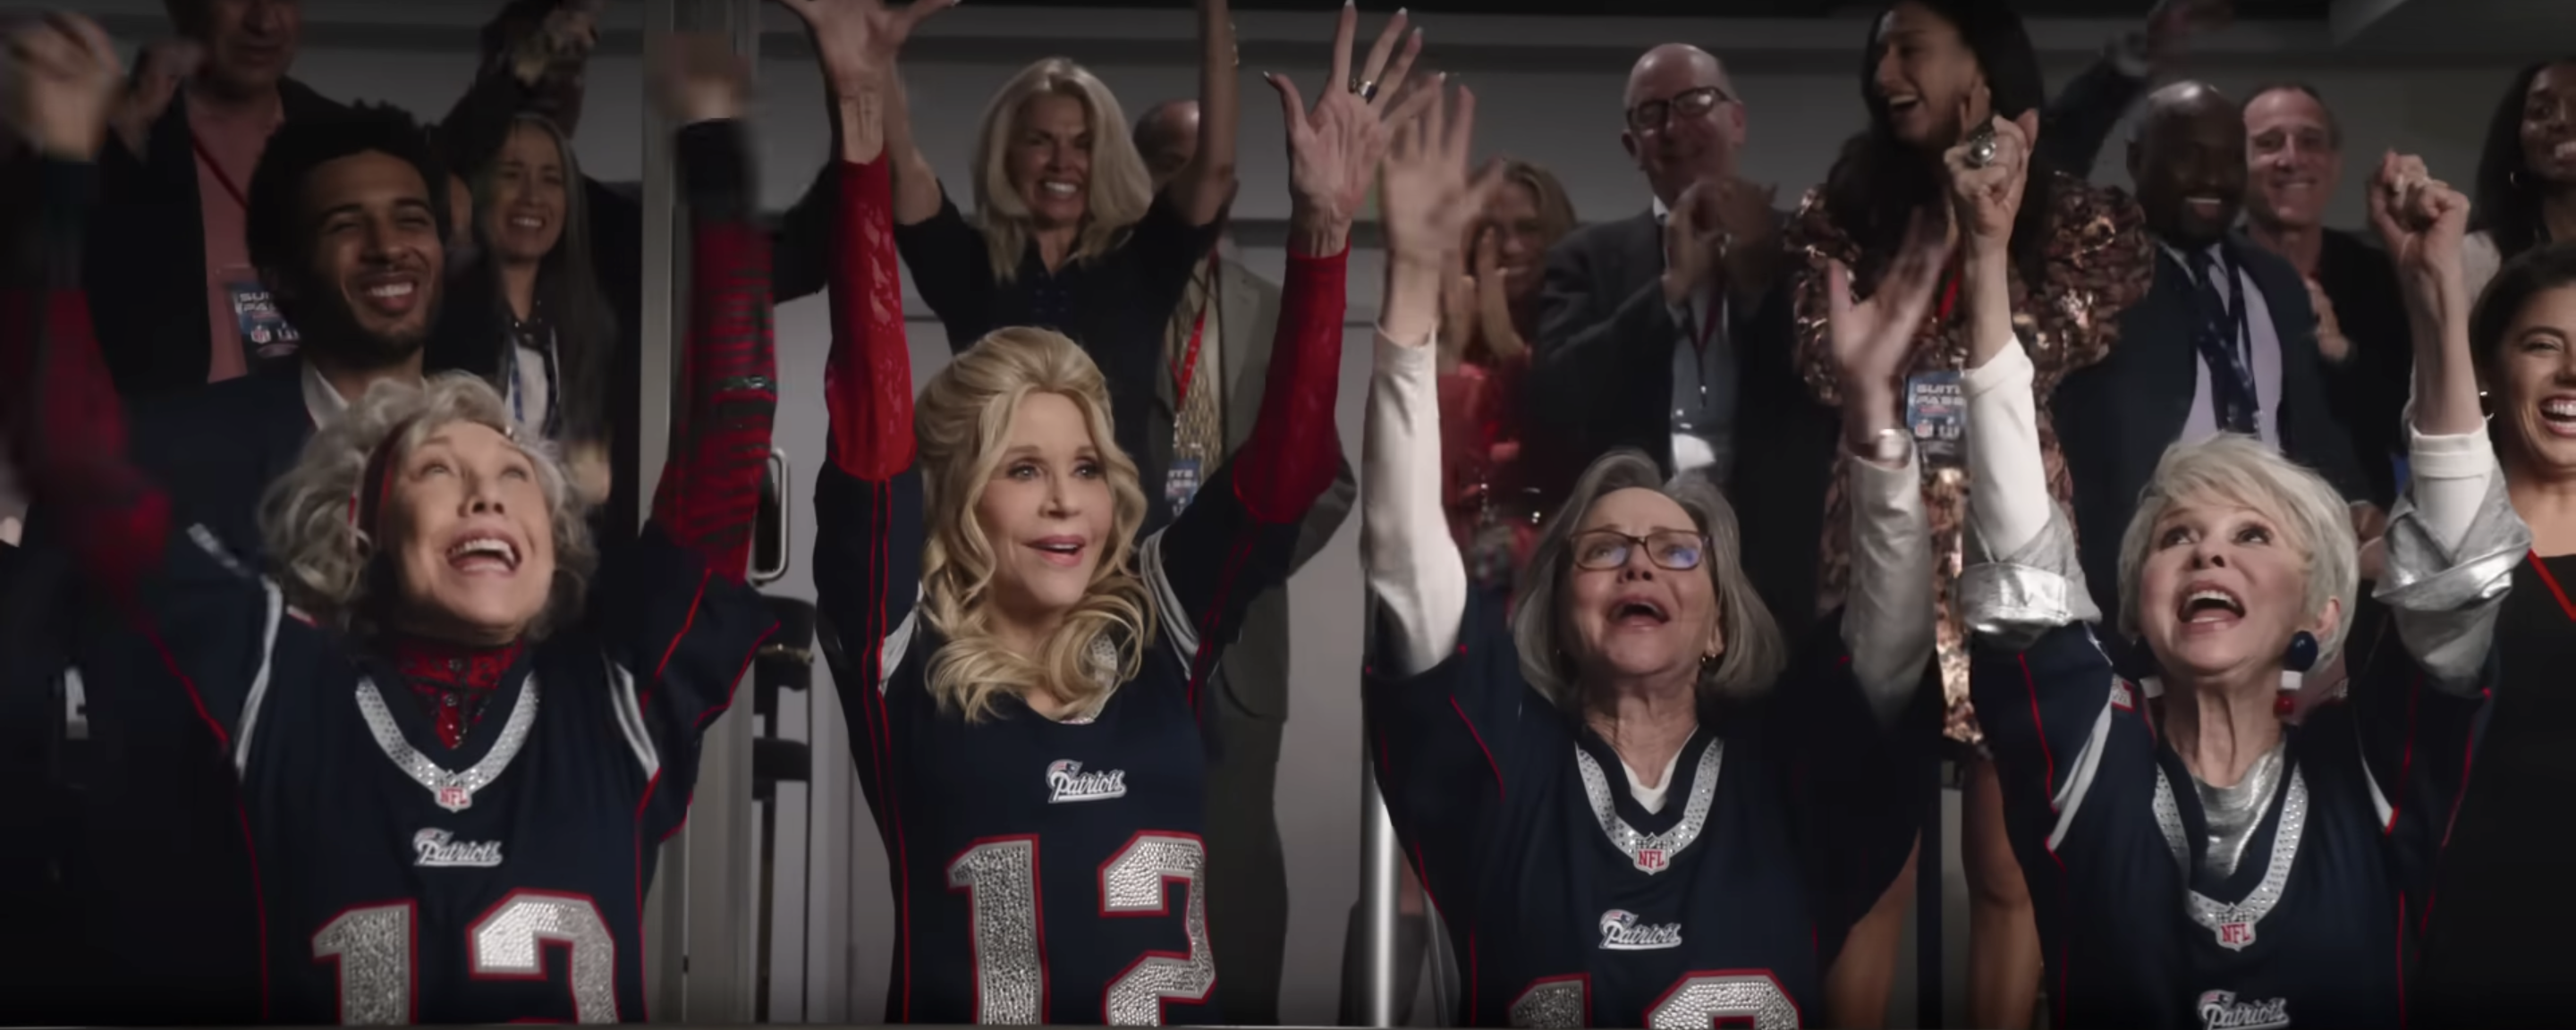 Bande-annonce : Lily Tomlin, Jane Fonda, Rita Moreno et Sally Field sont des inconditionnelles du football dans « 80 for Brady »